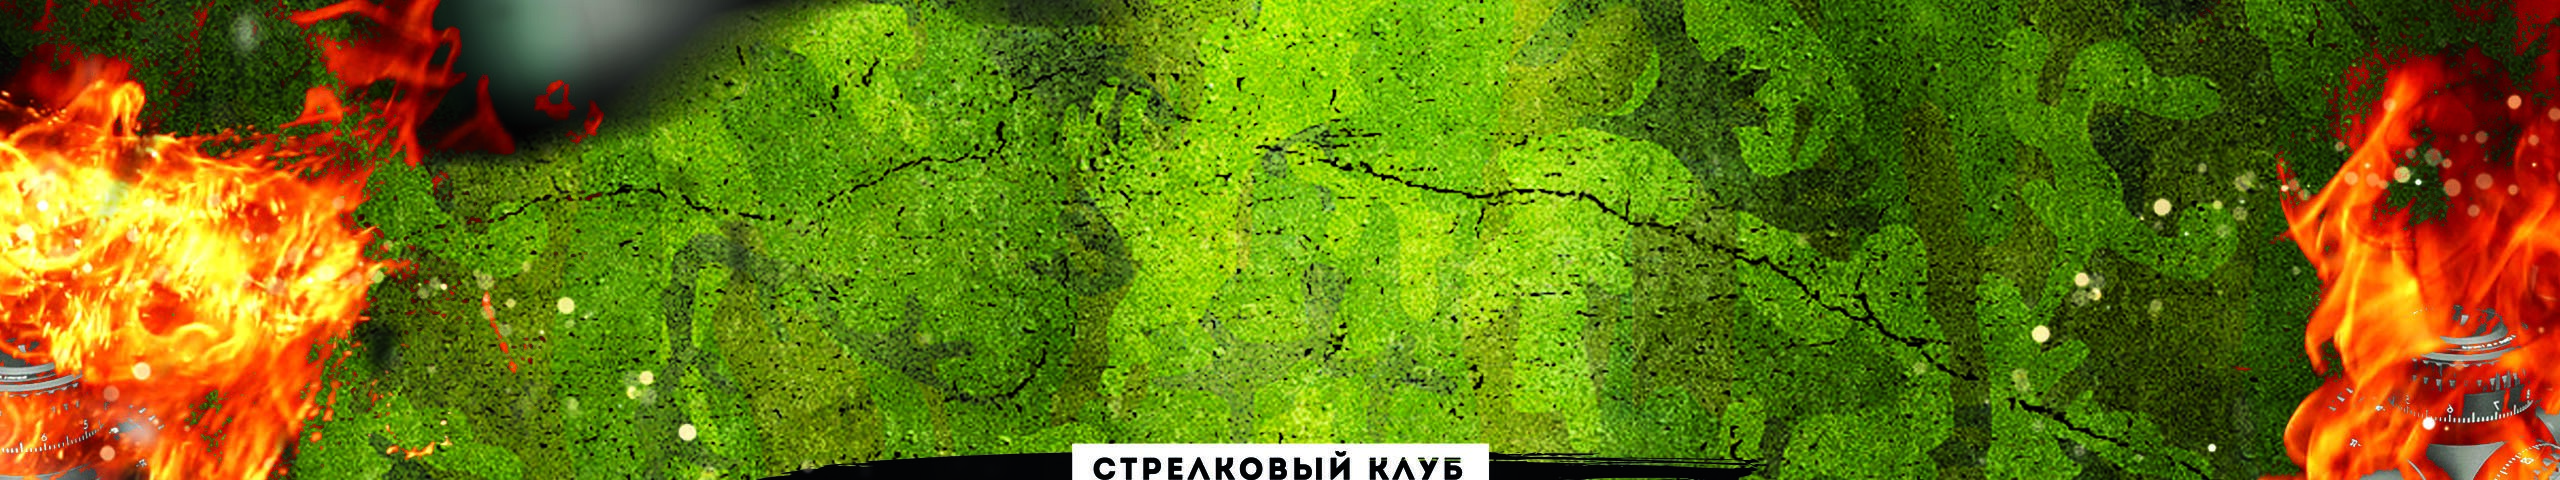 creator cover Петр Суховинский